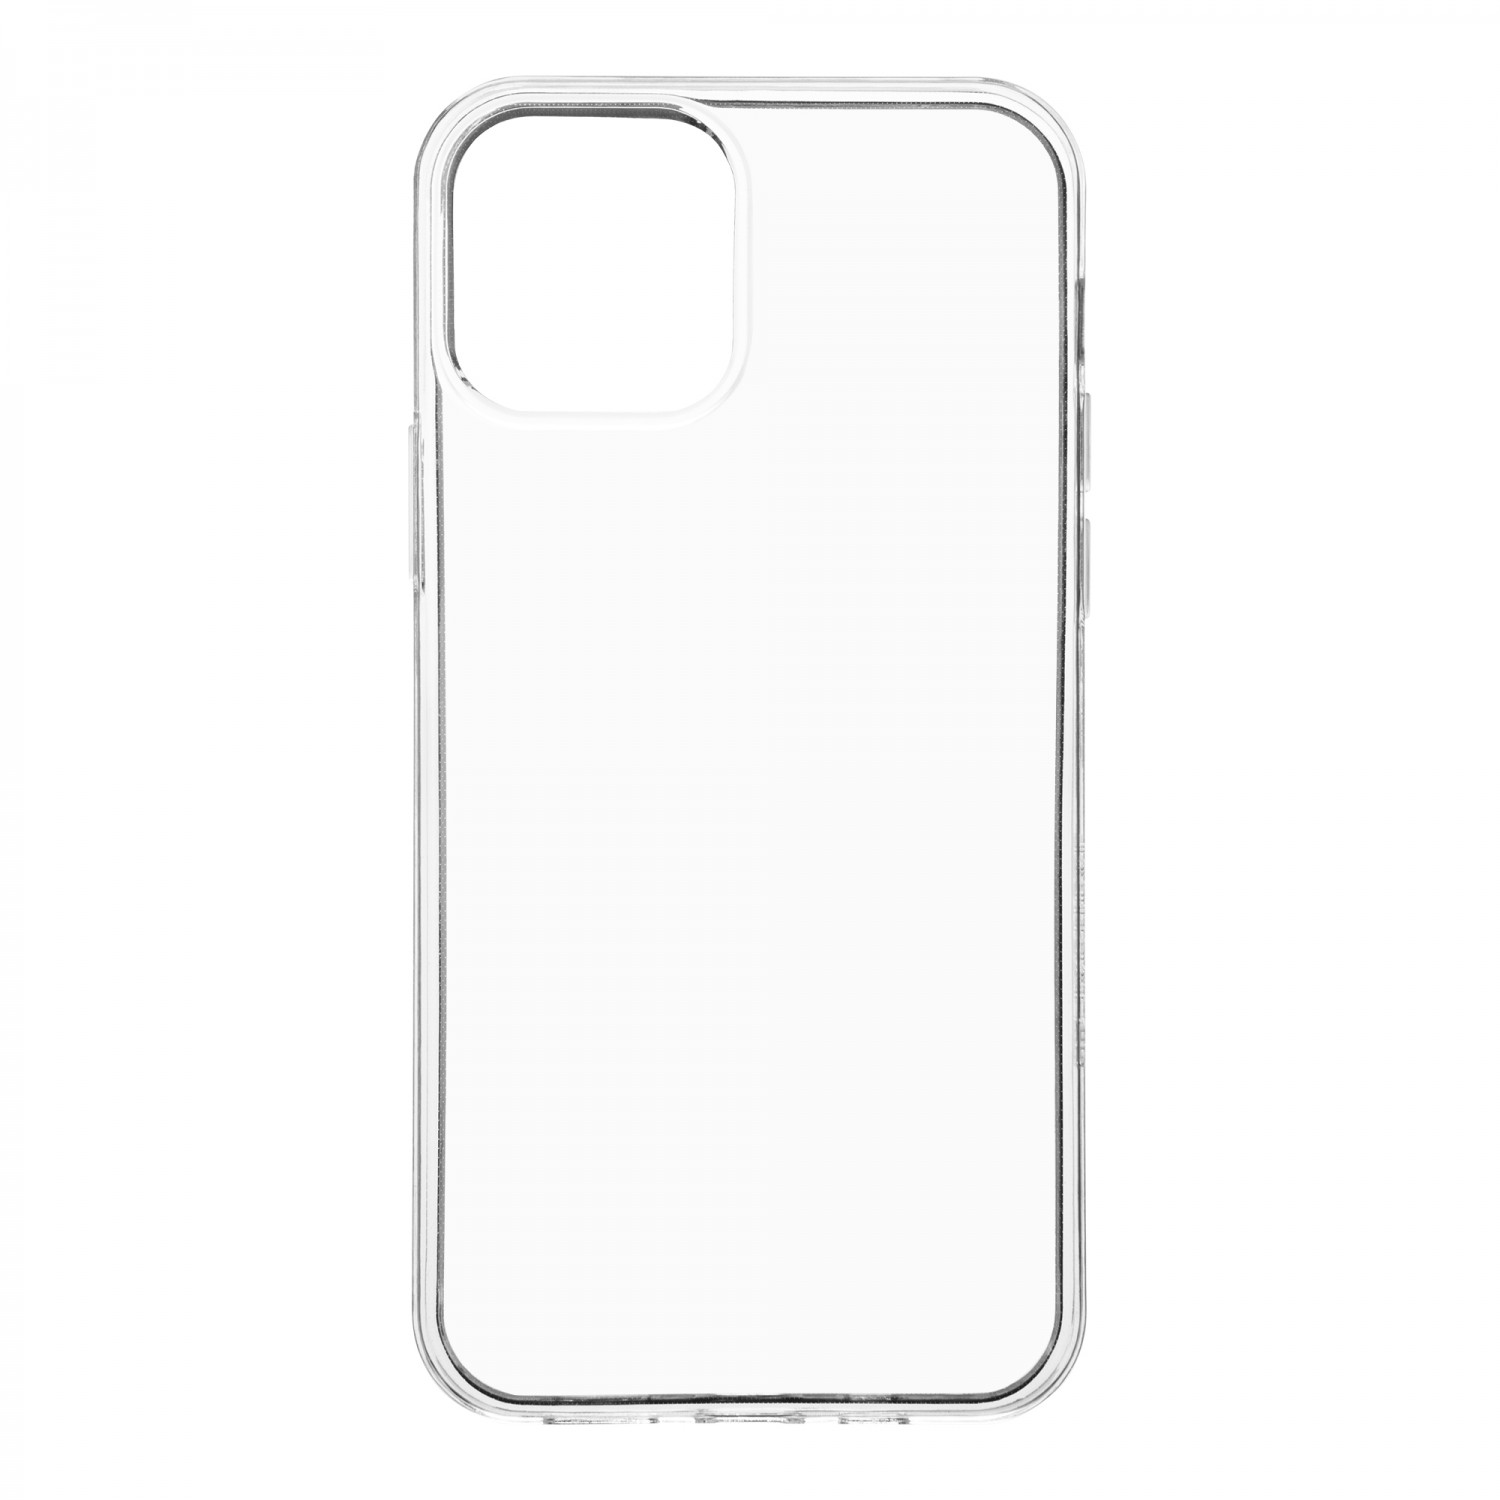 Tactical silikonové pouzdro, obal, kryt pro Apple iPhone 12 /12 Pro transparent 